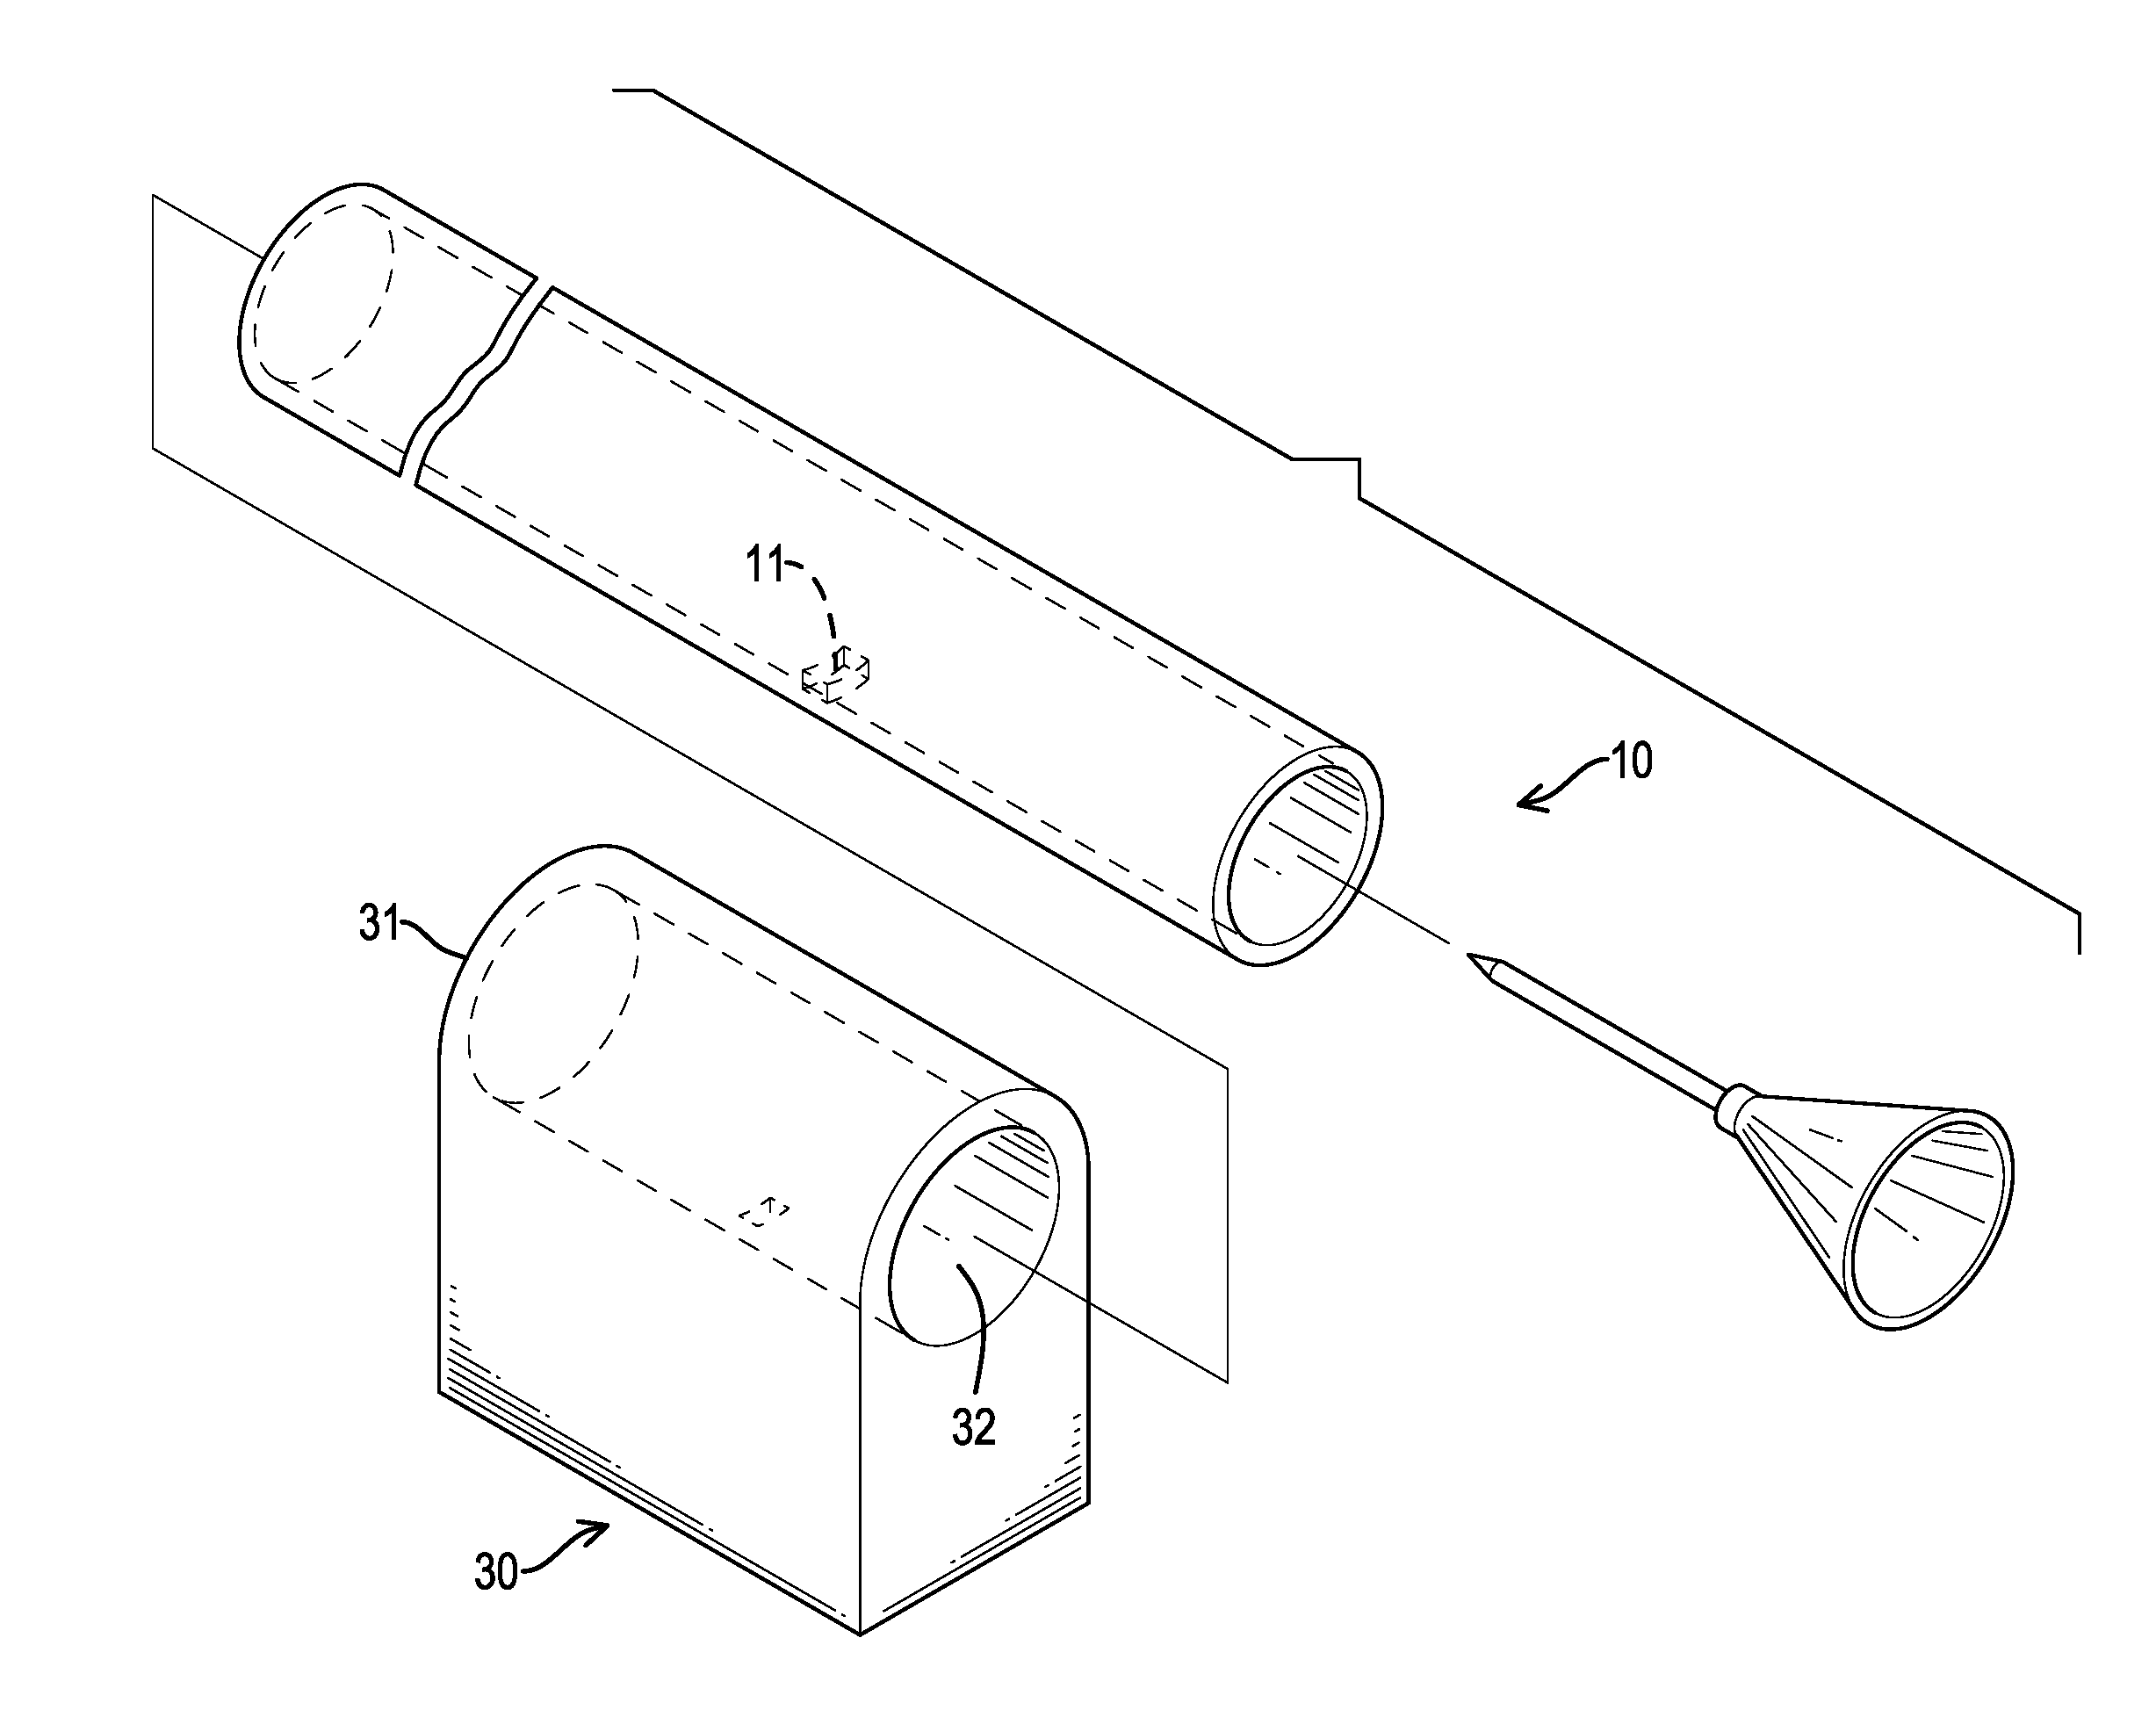 Pressure detection device for a blowgun